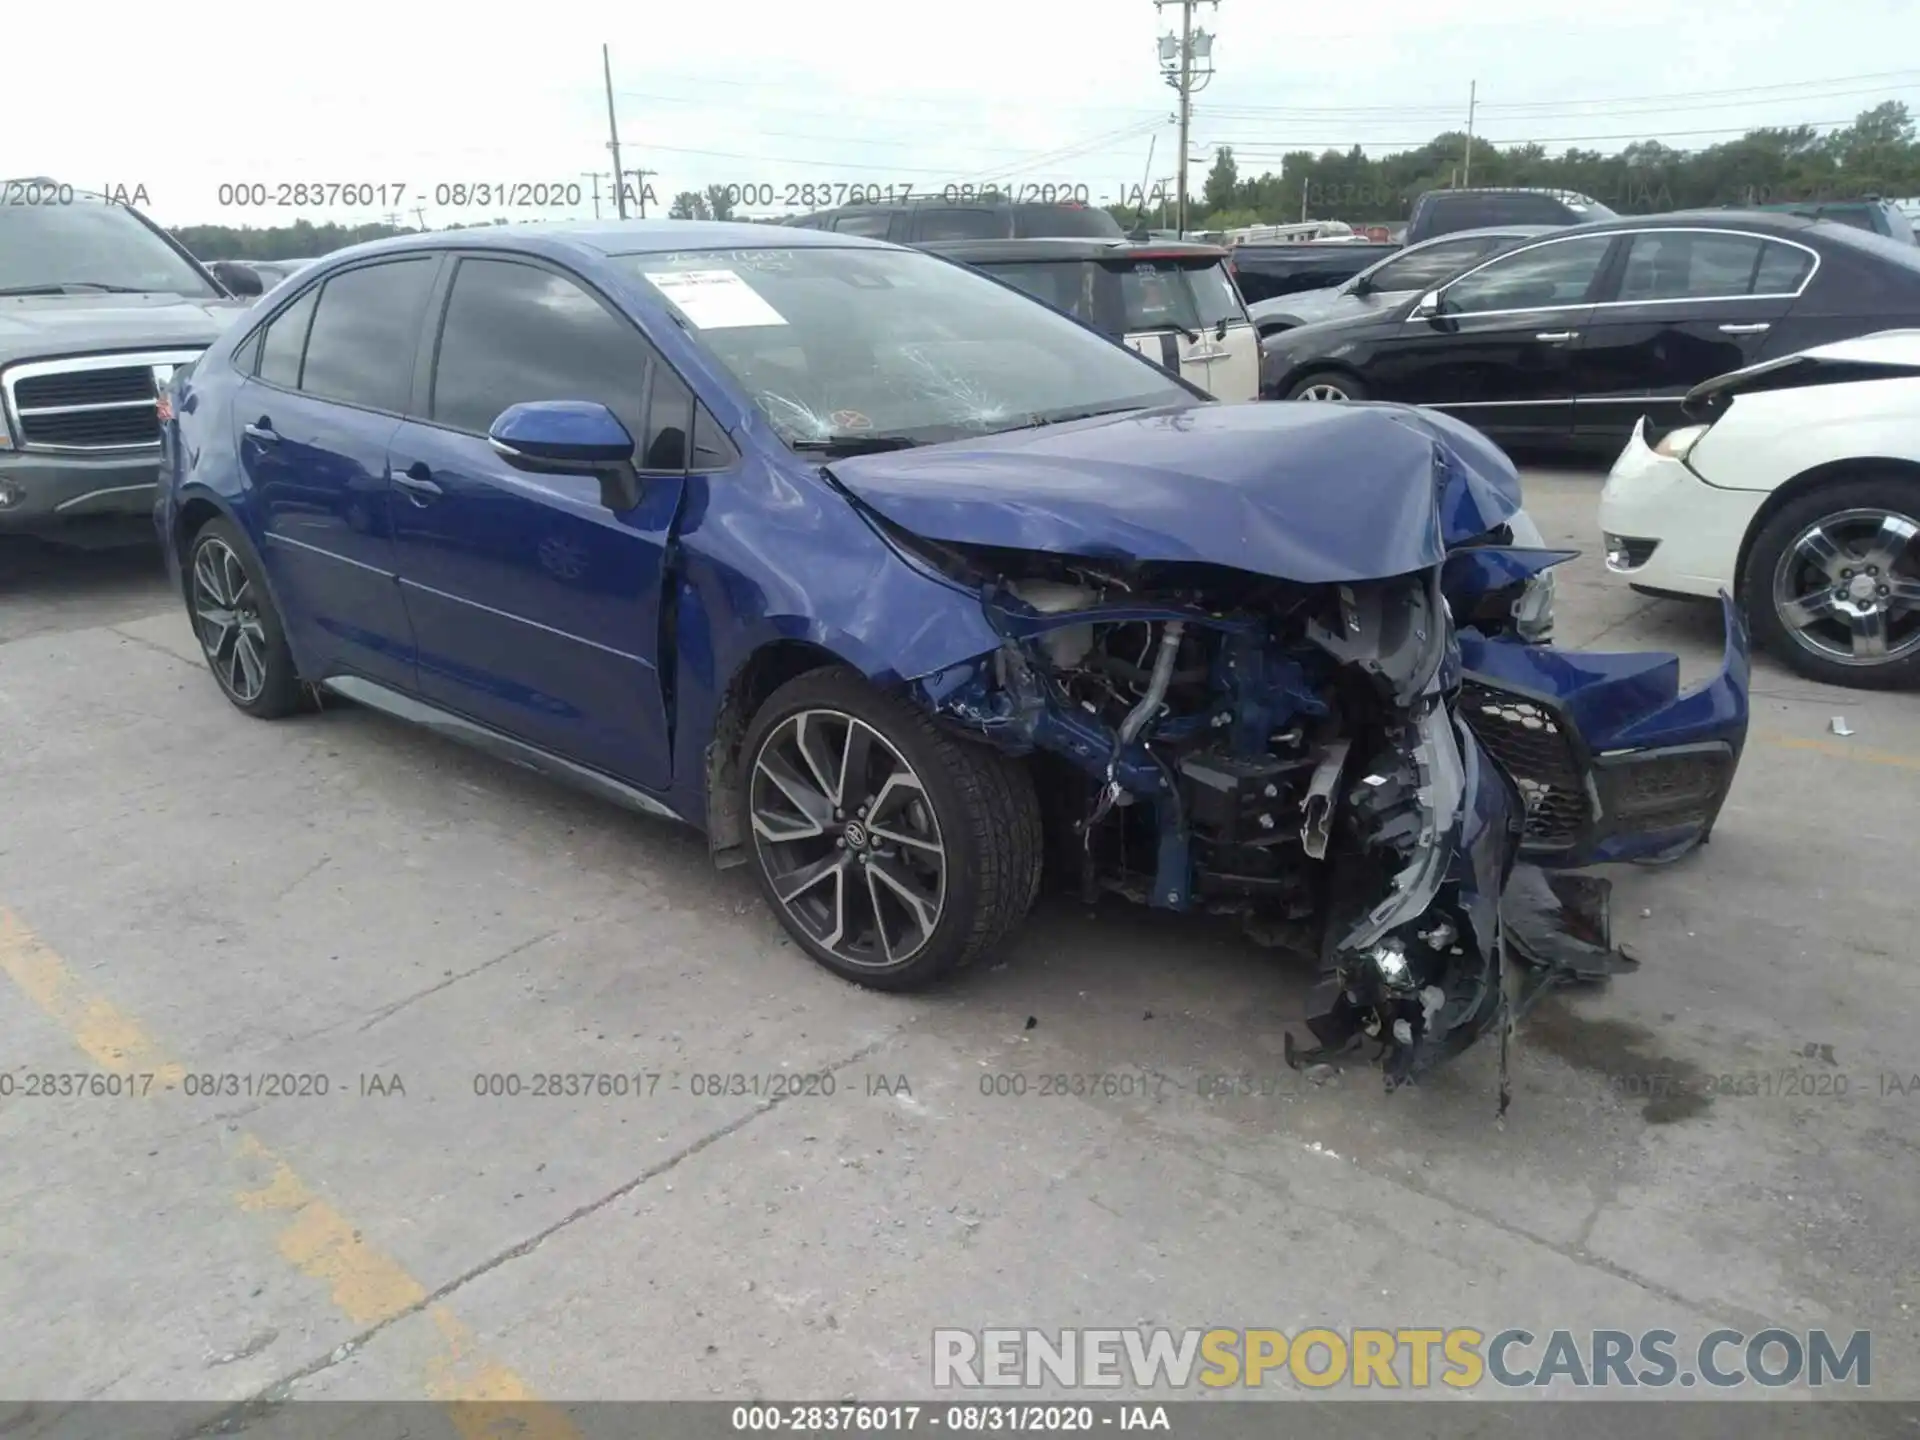 1 Photograph of a damaged car JTDS4RCEXLJ005505 TOYOTA COROLLA 2020